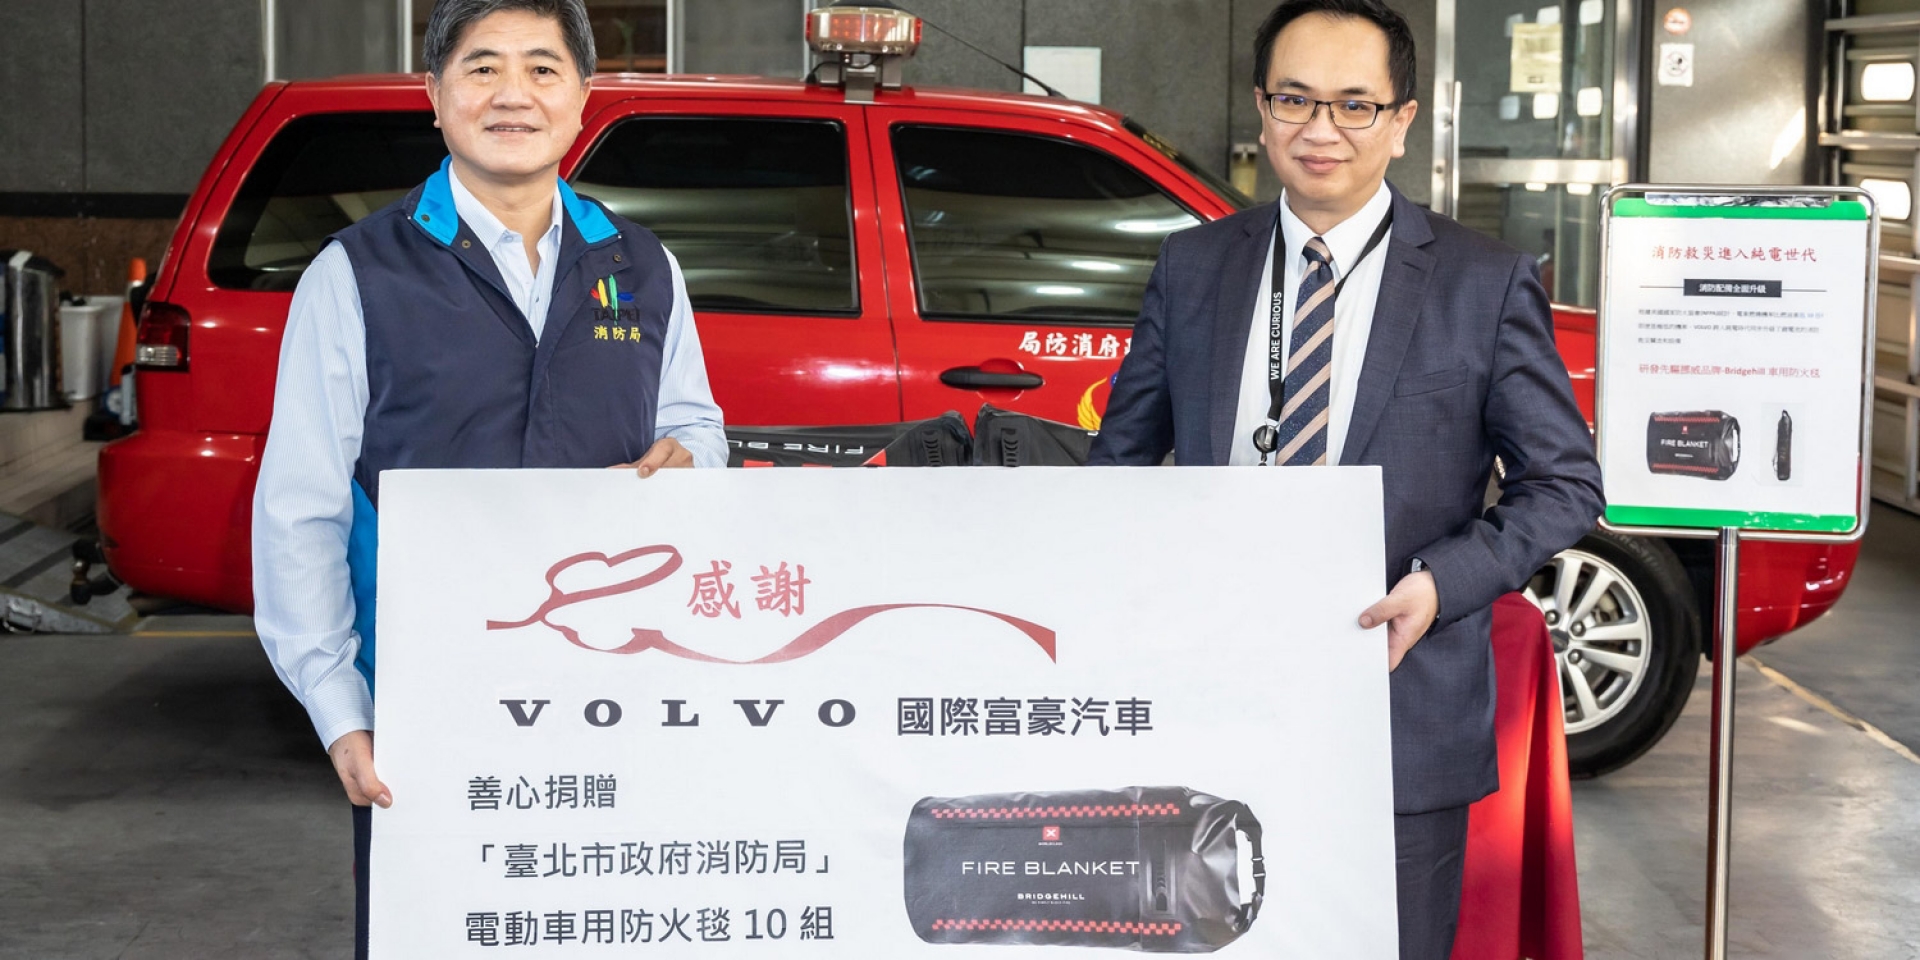 VOLVO 品牌全面電動化 大力推動電動車安全 參與台北市消防局安全訓練講座 捐贈專業車用防火毯